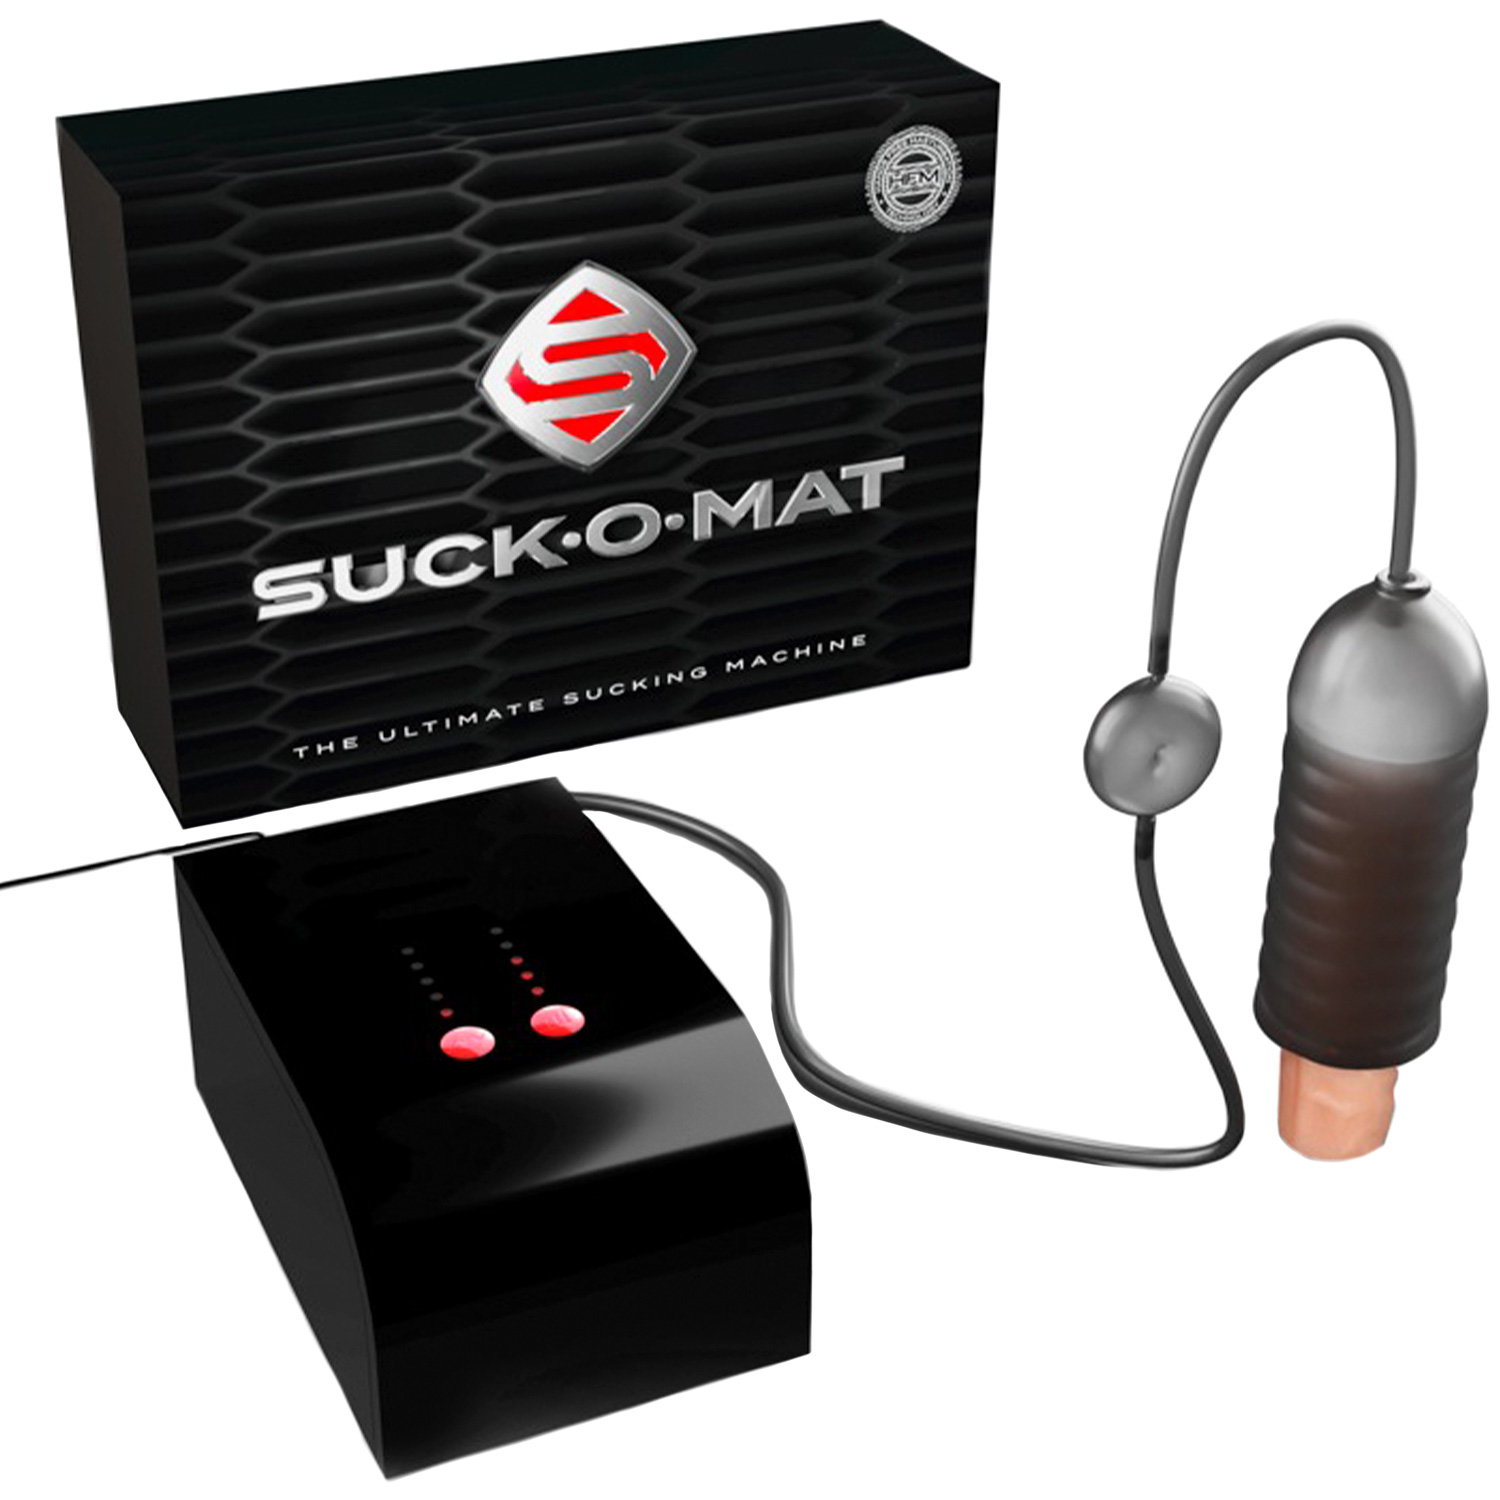 Suck-O-Mat The Ultimate Sucking Machine - Sort